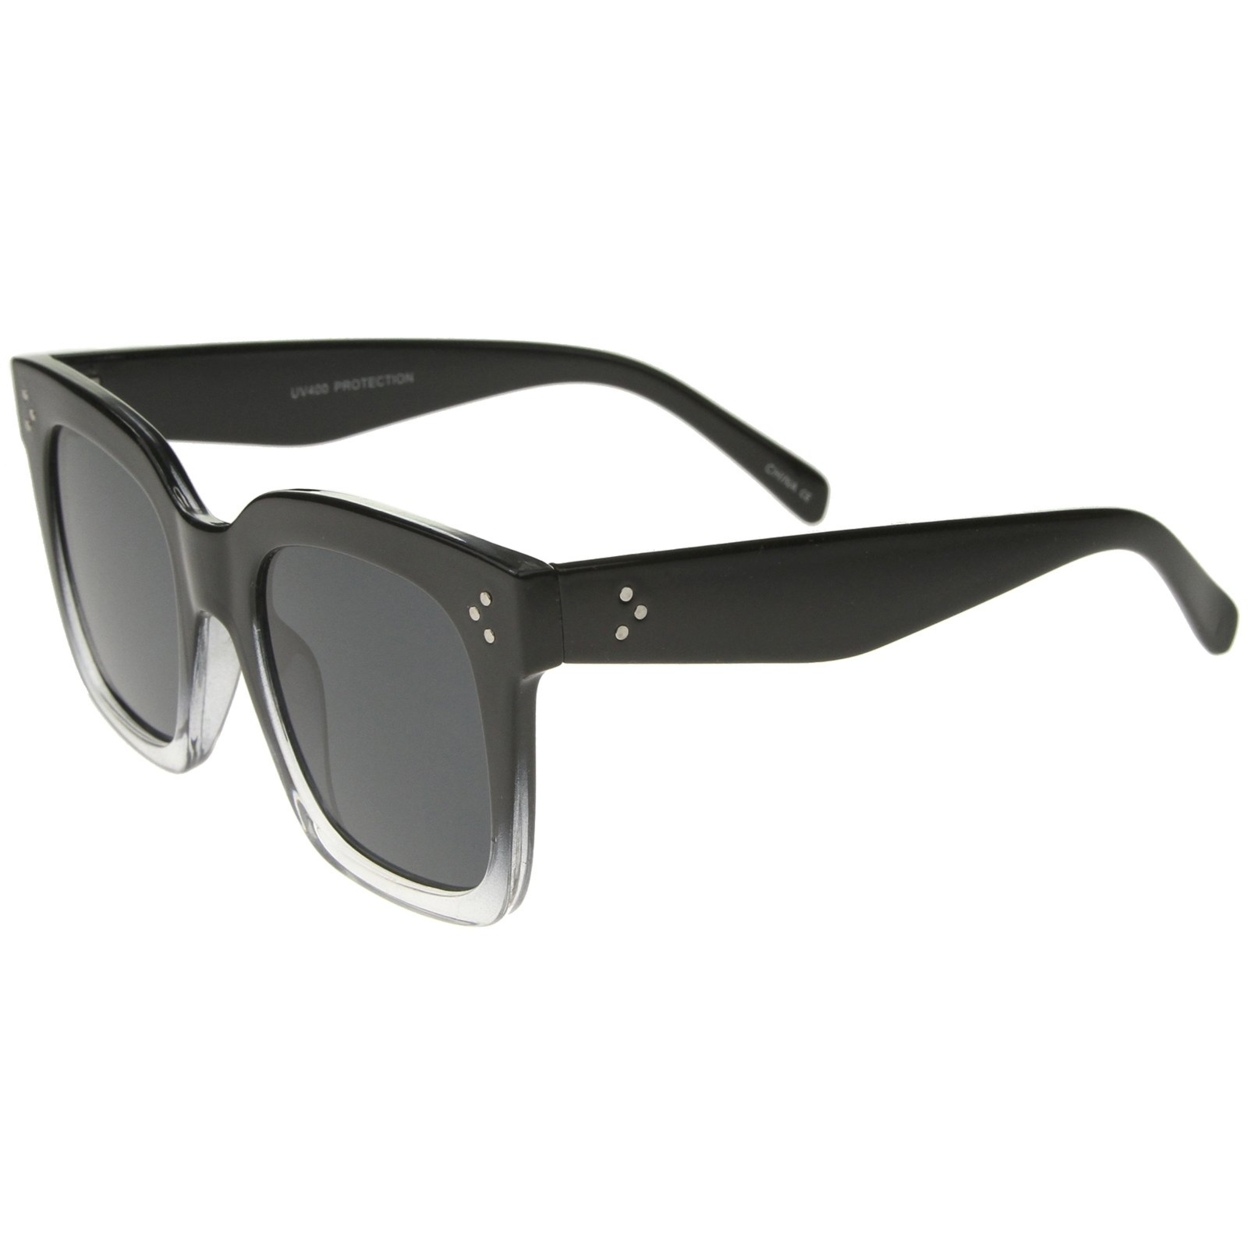 Modern Two-Toned Bold Frame Square Horn Rimmed Sunglasses 50mm - Black-Tortoise Fade / Lavender